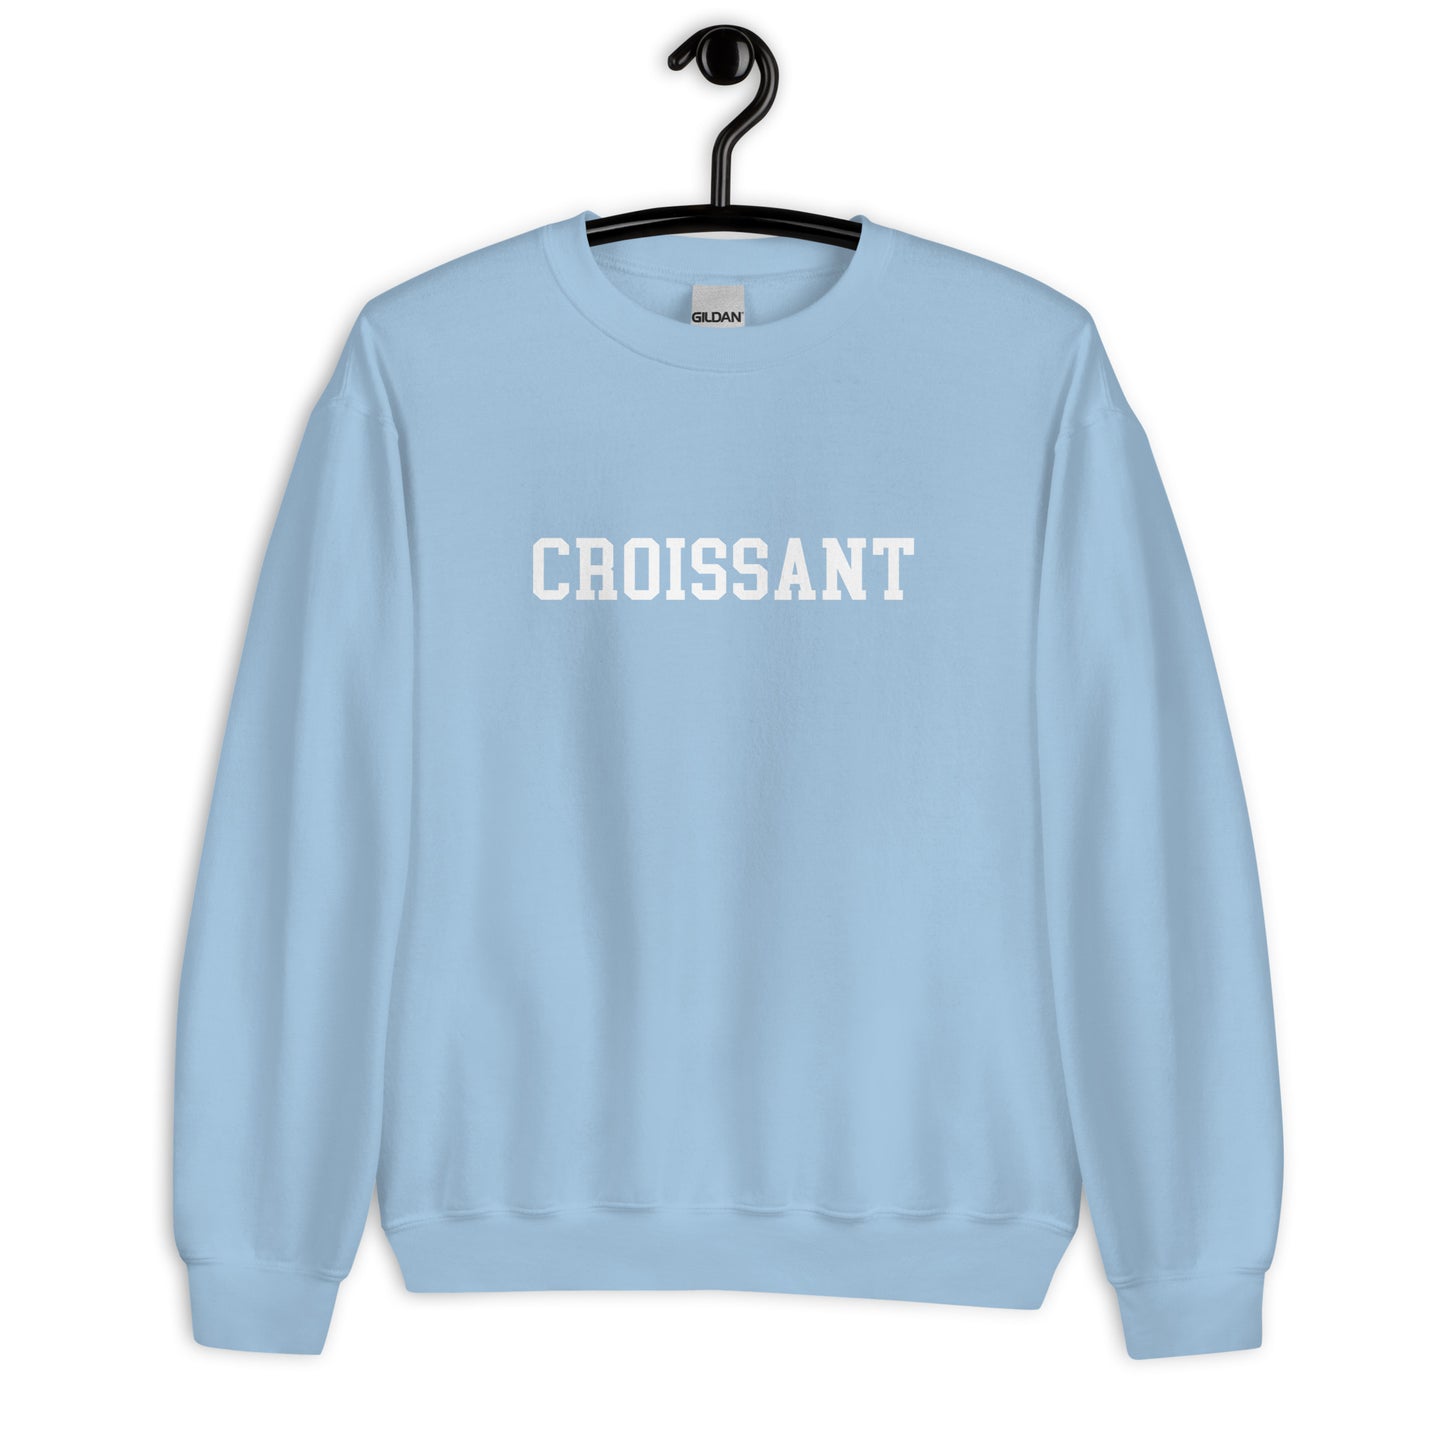 Croissant Sweatshirt - Straight Font